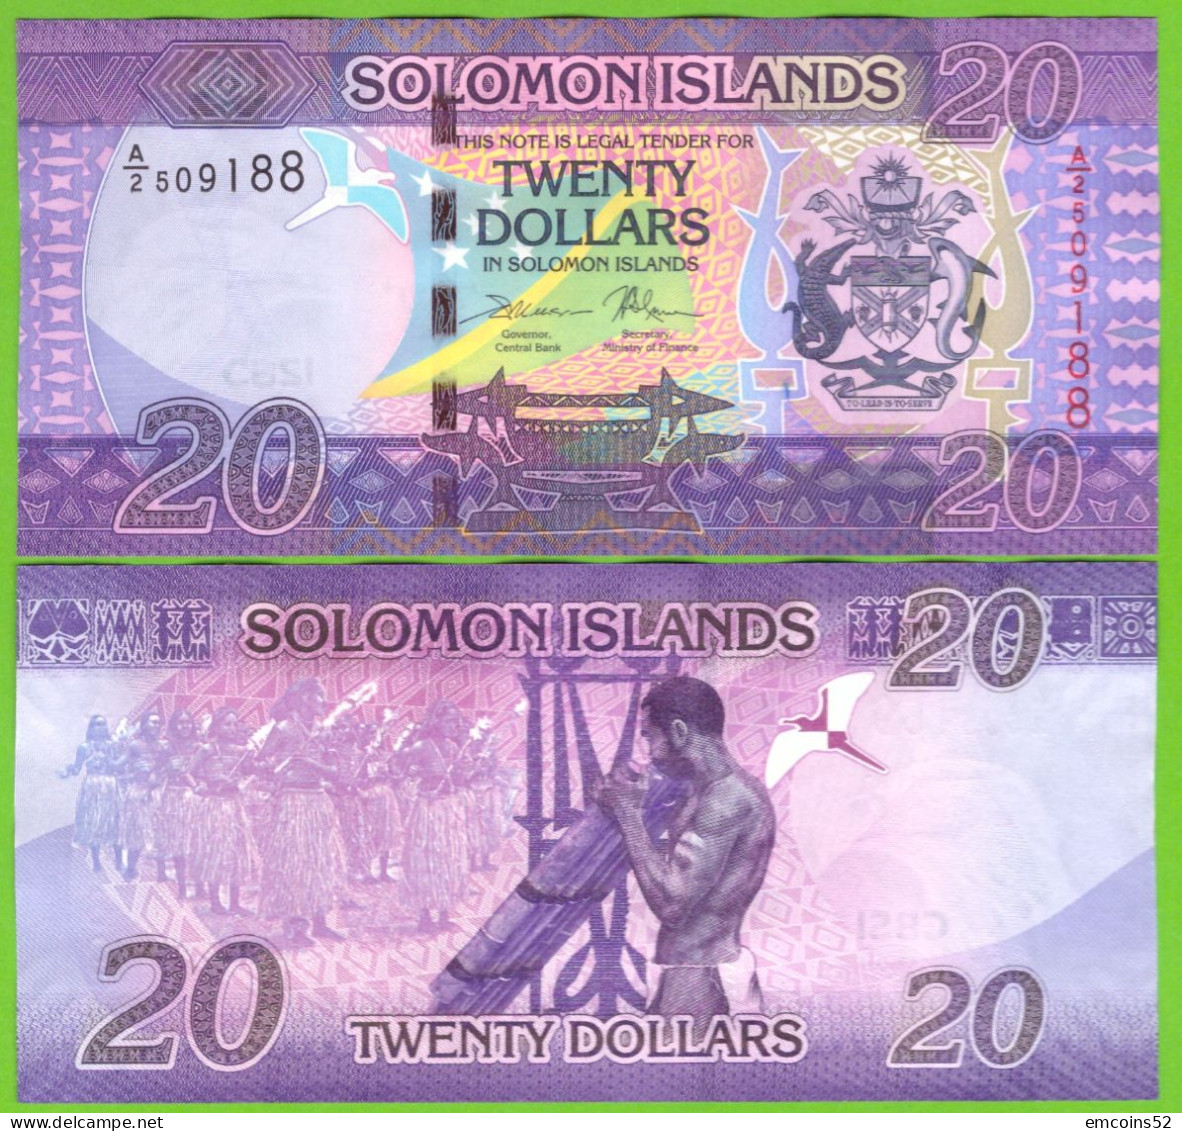 SOLOMON ISLANDS 20 DOLLARS 2017  P-34(1)  UNC - Salomonseilanden